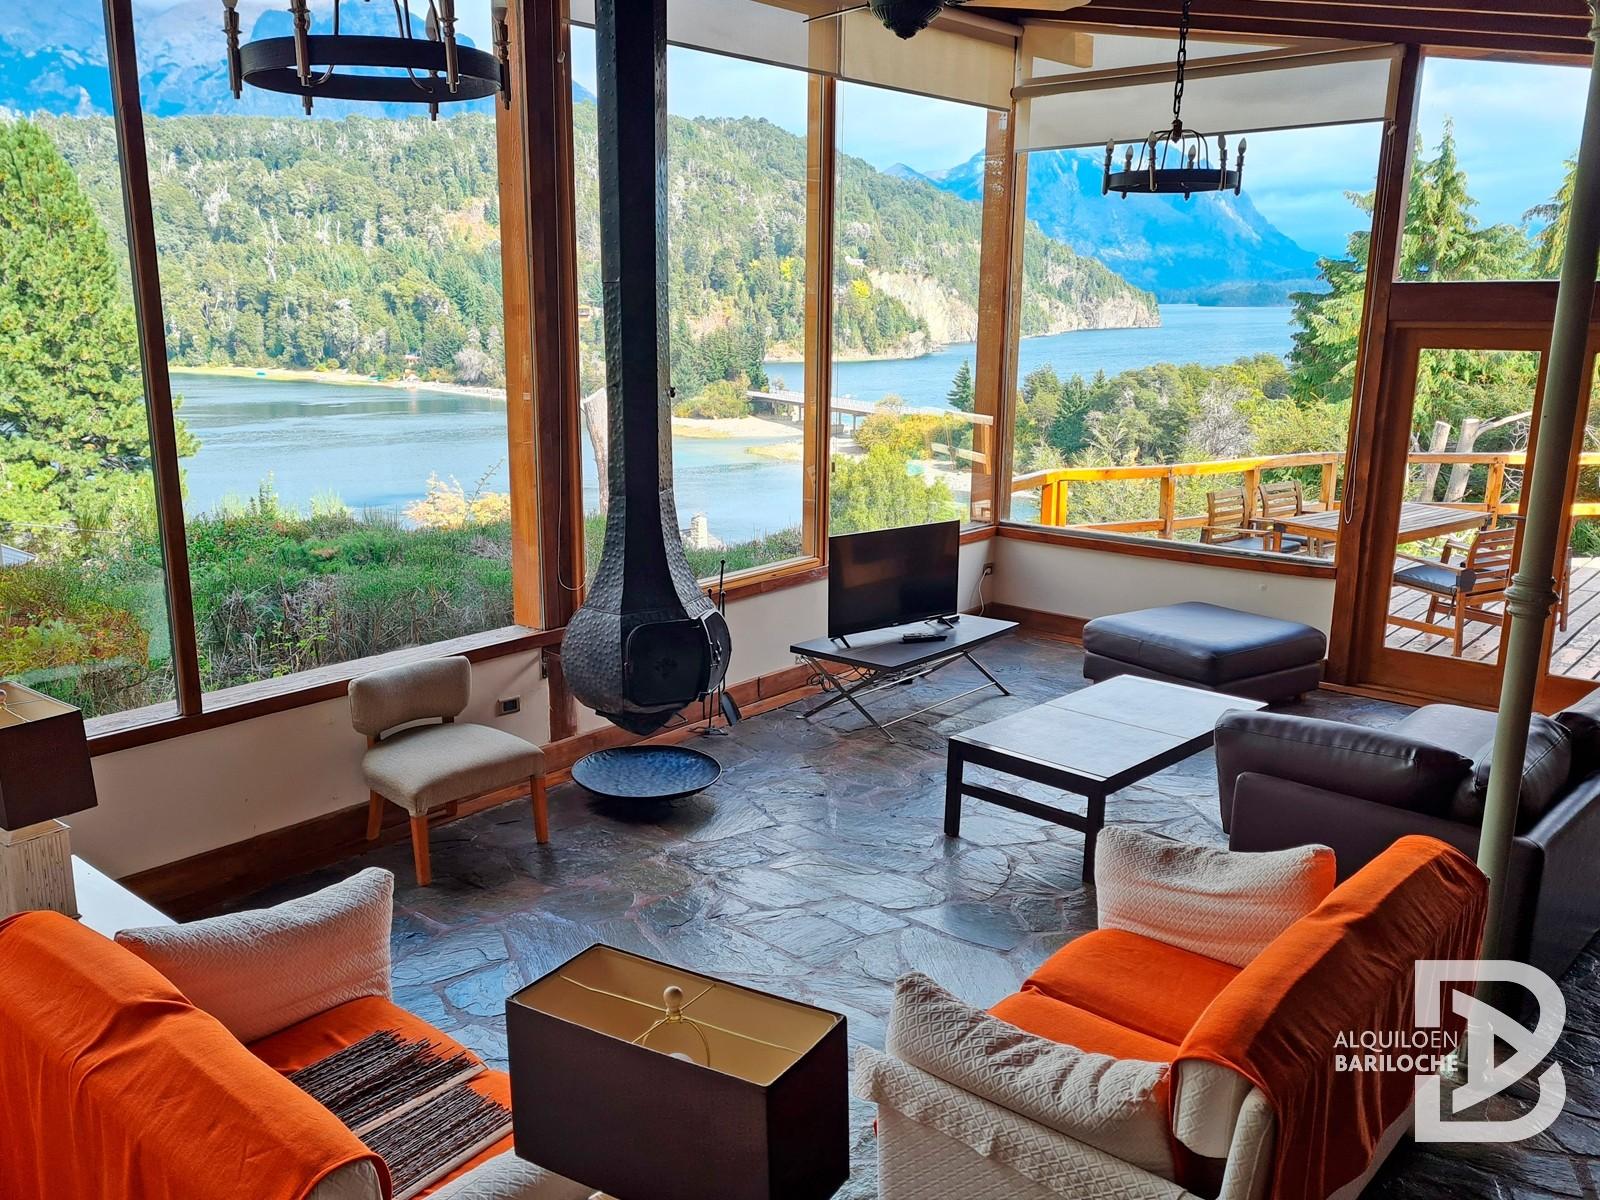 Alquiler Casa en Bariloche con Vista Panoramica al Lago Moreno. 6 PAX. Circuito Chico.